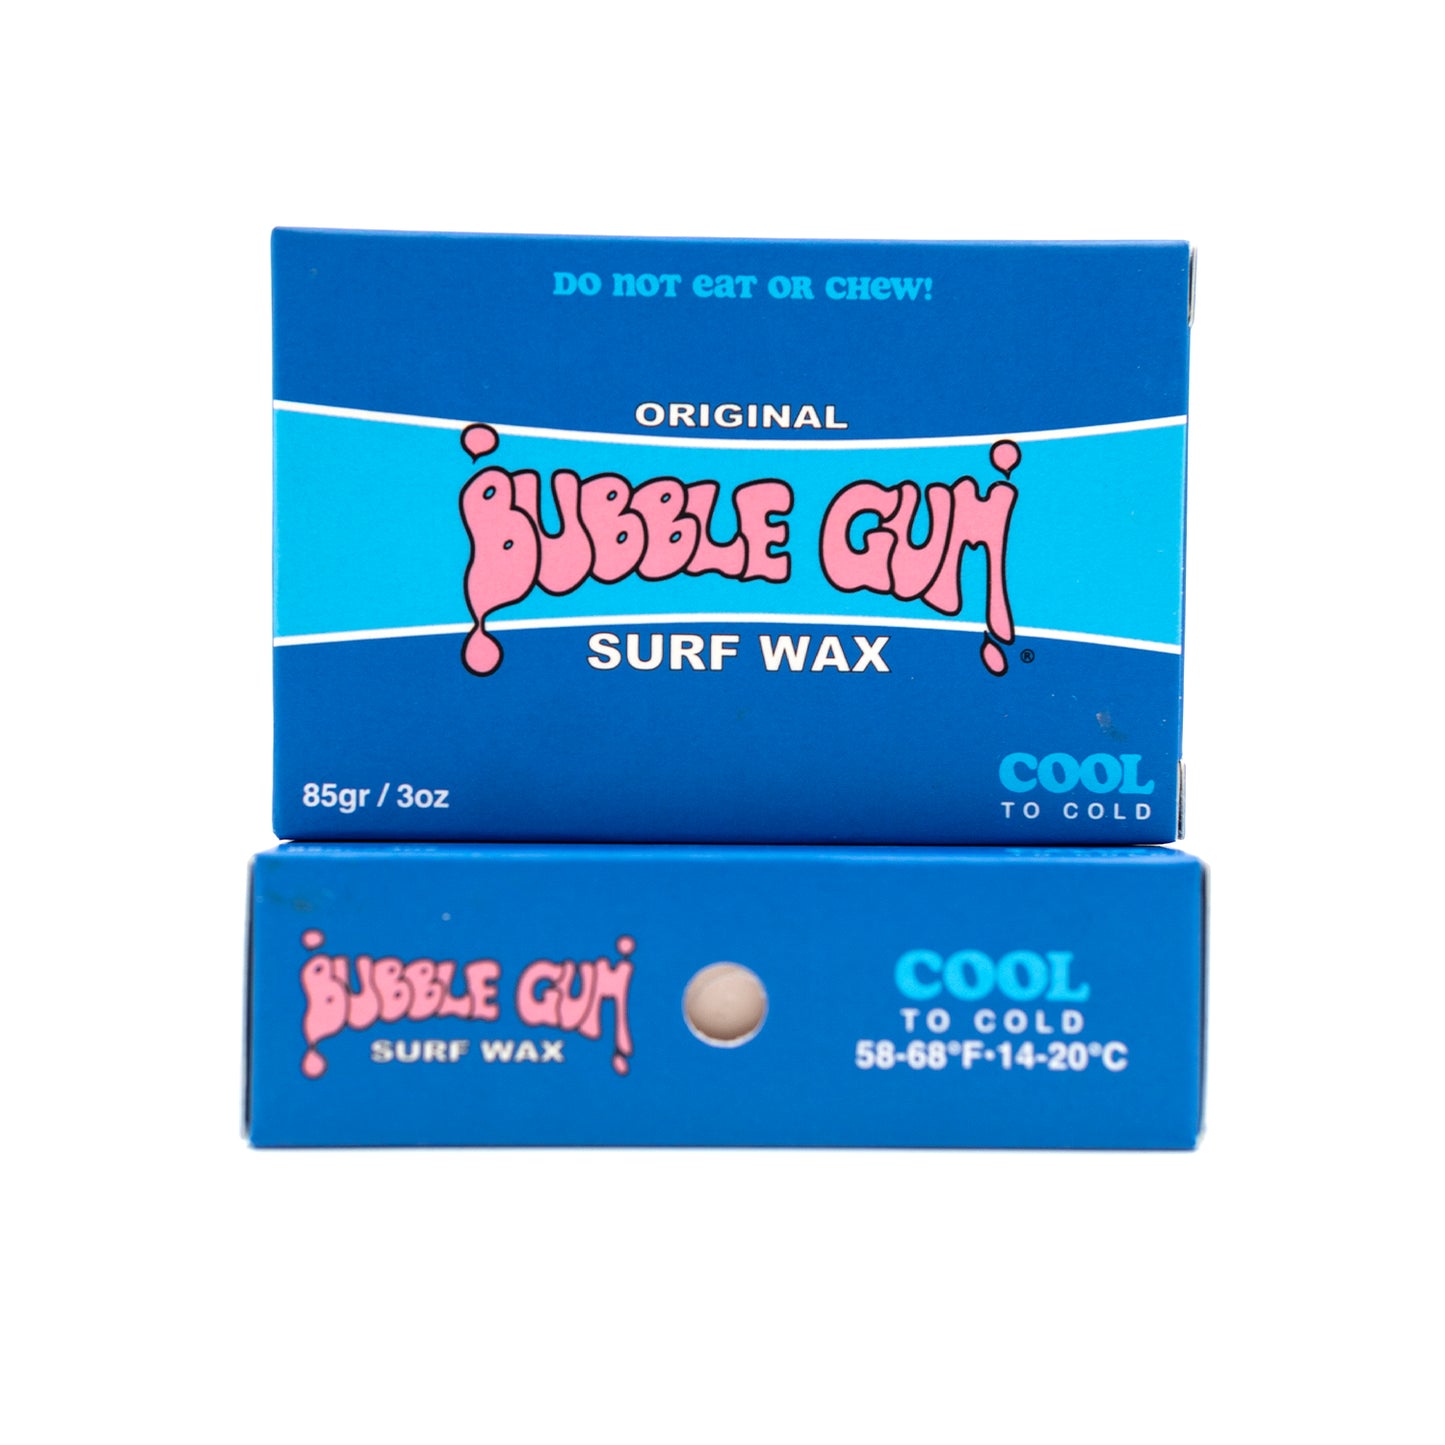 Bubble Gum "Original Formula" Surf Wax Box - Cool to Cold - 58°- 68°